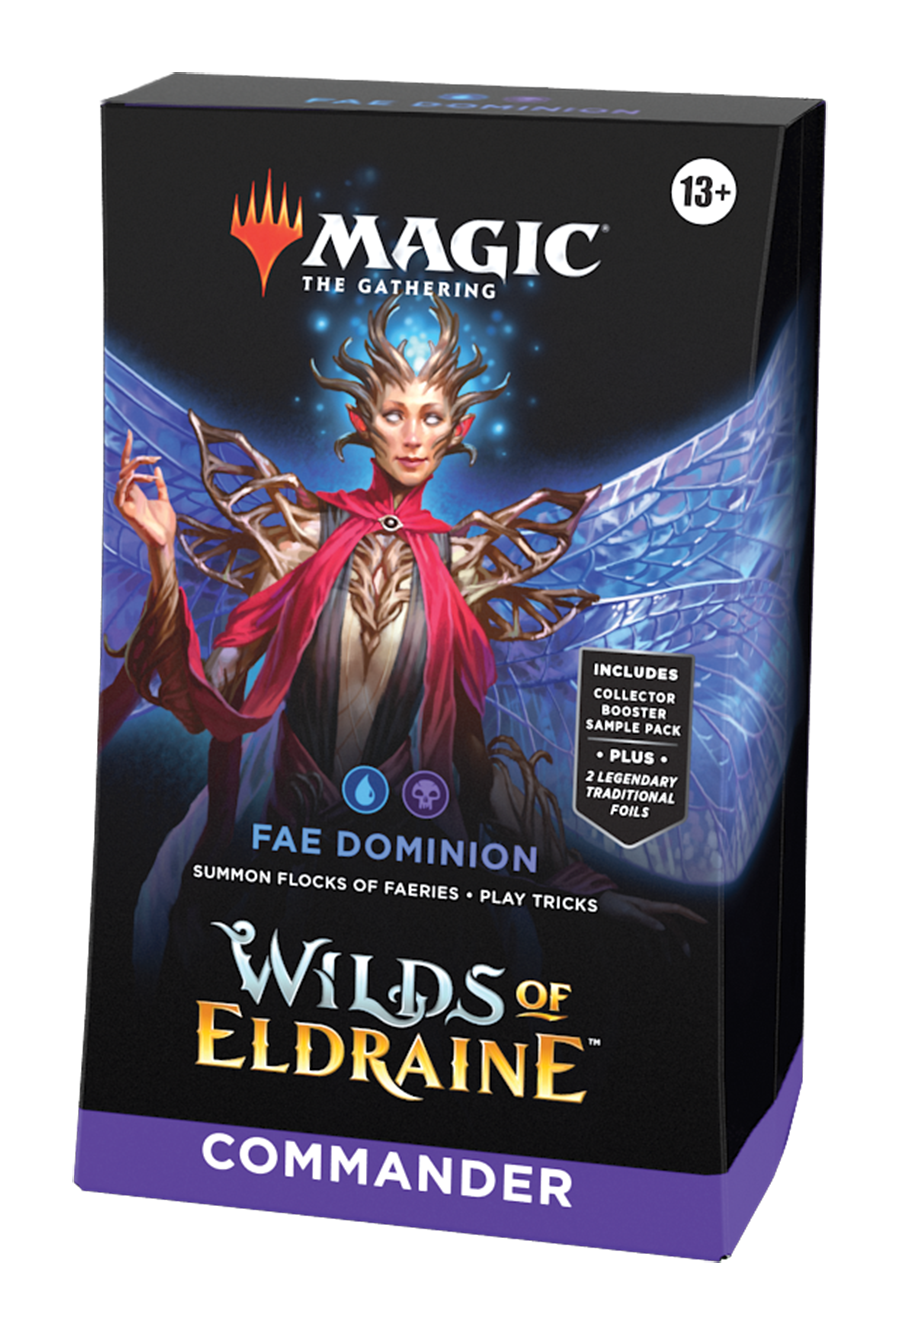 MTG Командир "Wilds of Eldraine" - Fae Dominion (англ.)